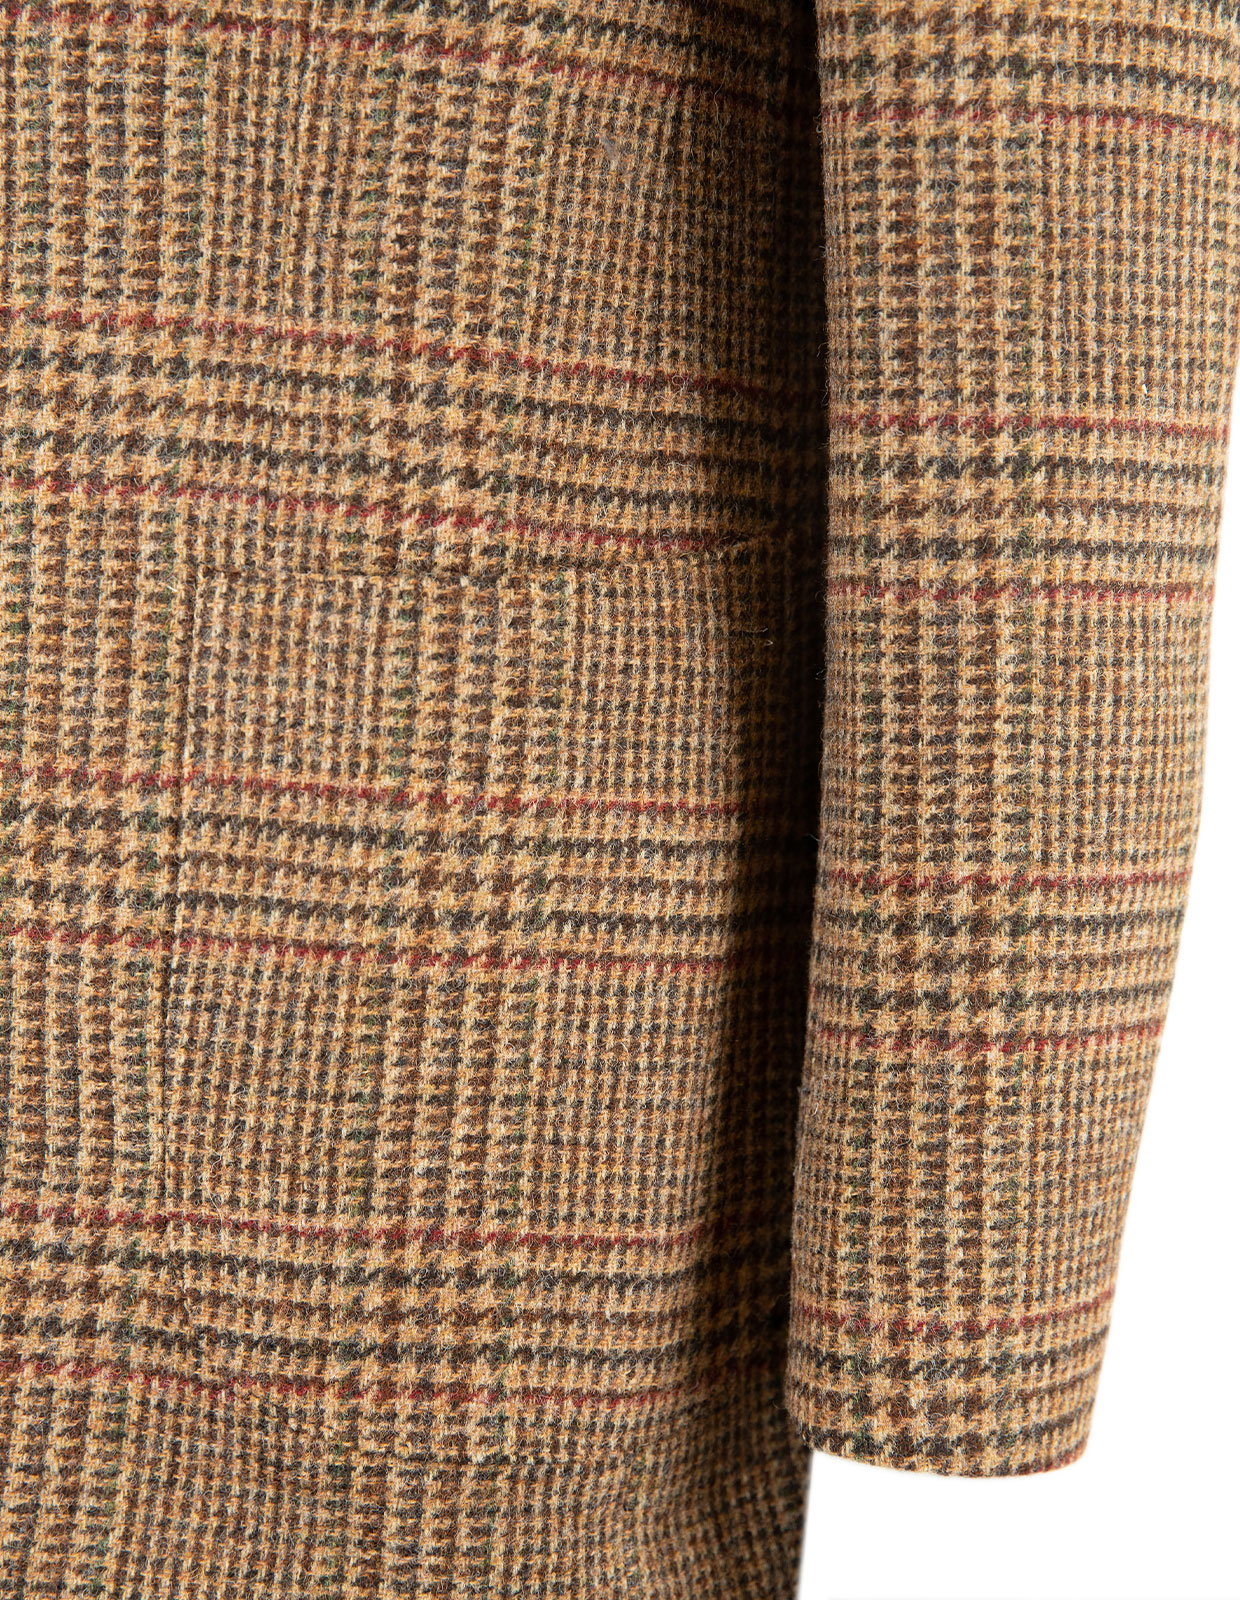 Sartorial Jacket Tweed Glencheck Brown